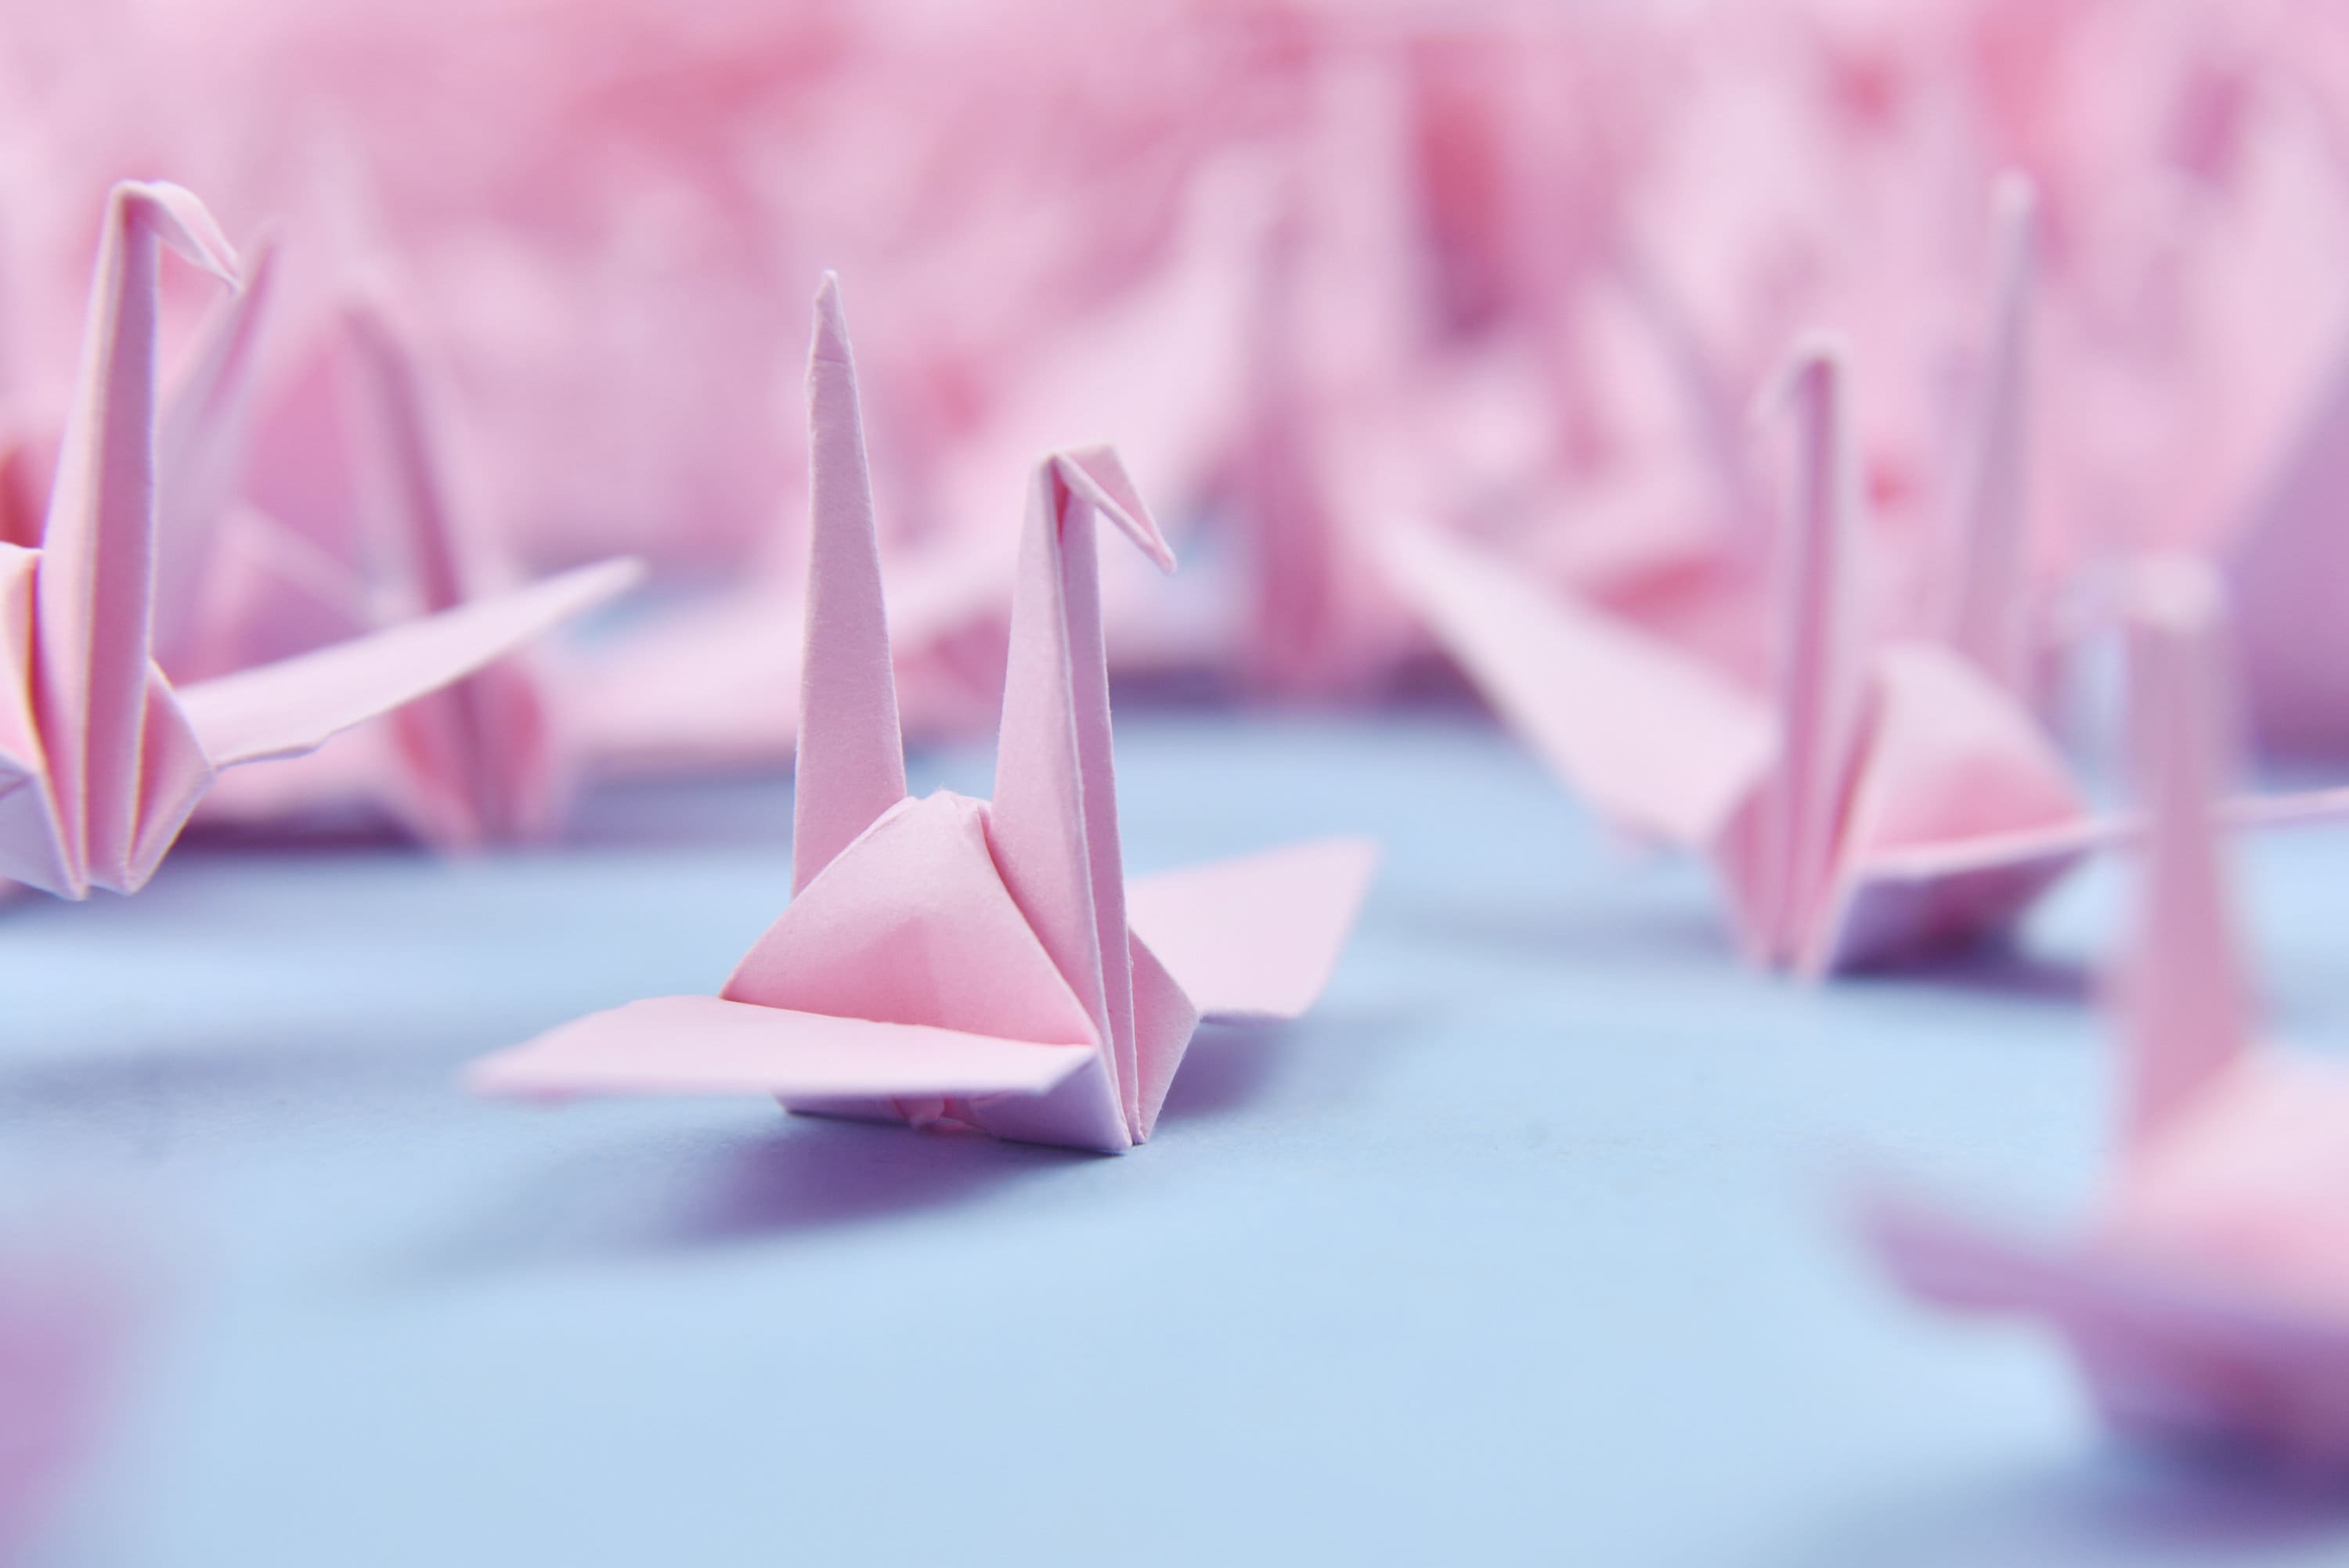 1000 Grúas de Origami de Sombra Rosa - Hechas de 7,5 cm (3x3 pulgadas) - para Boda, Regalo de San Valentín, Navidad